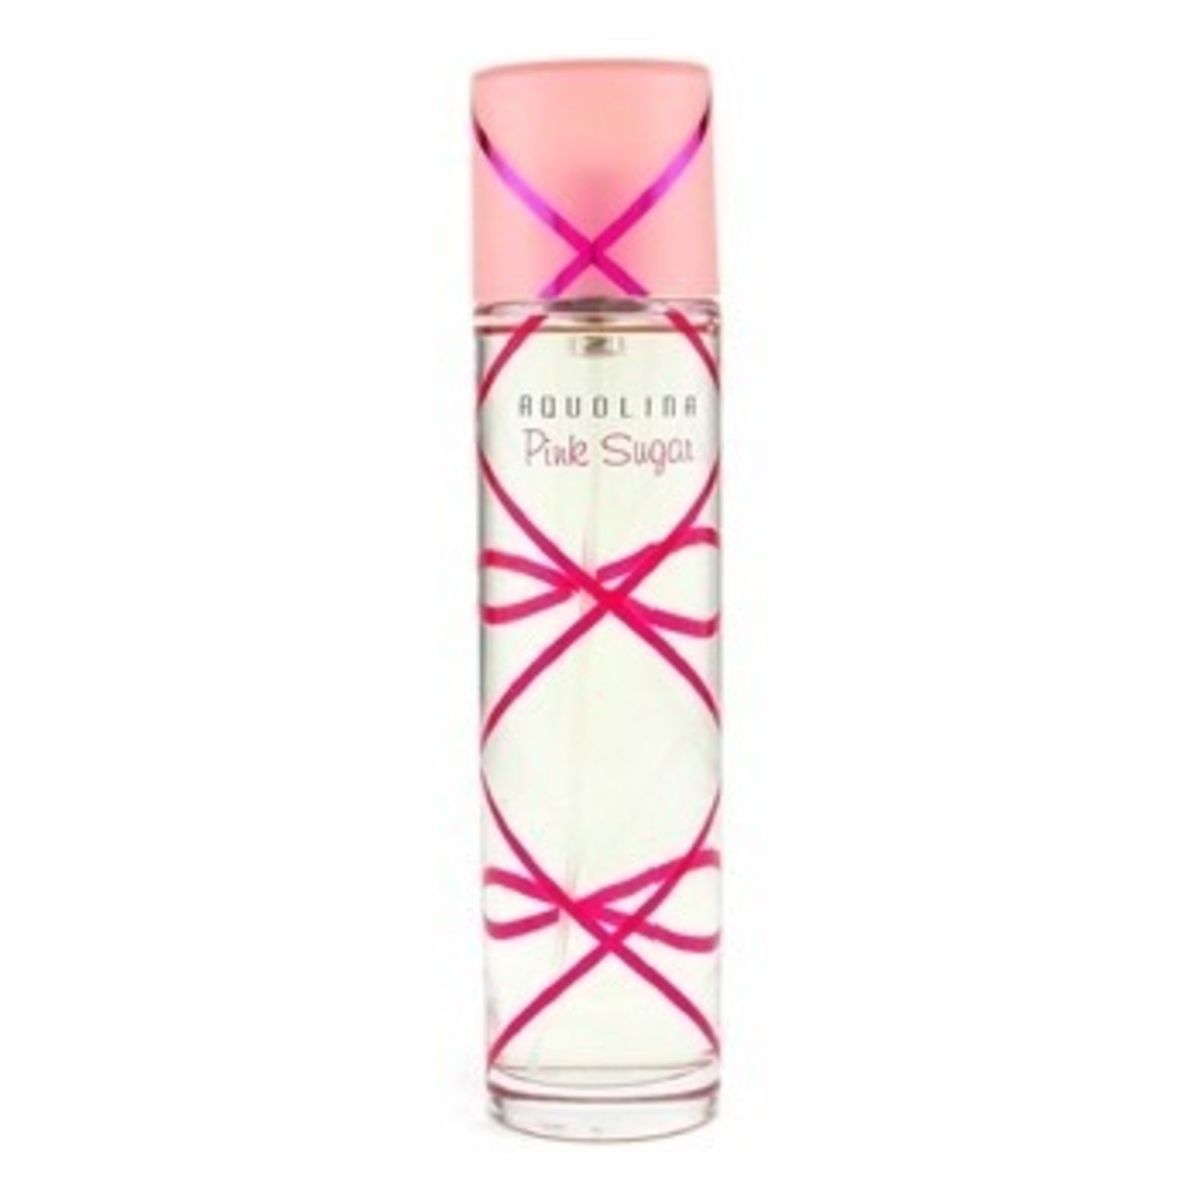 Perfume Pink Sugar Aquolina 100 Ml Original | Perfume ...